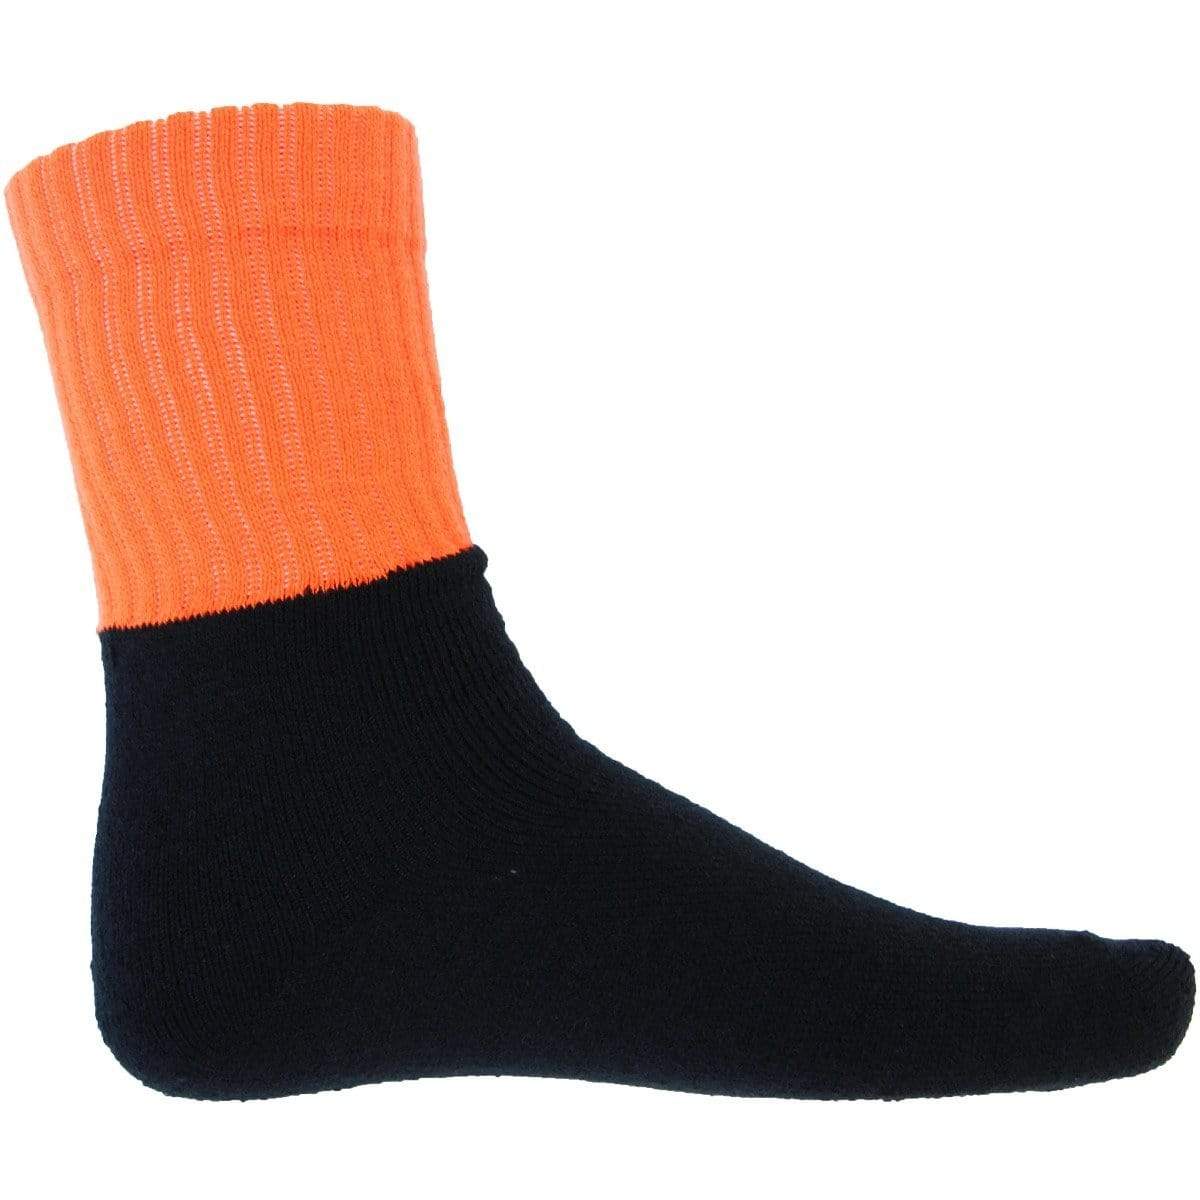 Dnc Workwear Hi-vis Two-tone Acrylic 3 Pack Work Socks - S123 Work Wear DNC Workwear Orange/Black 12+ 